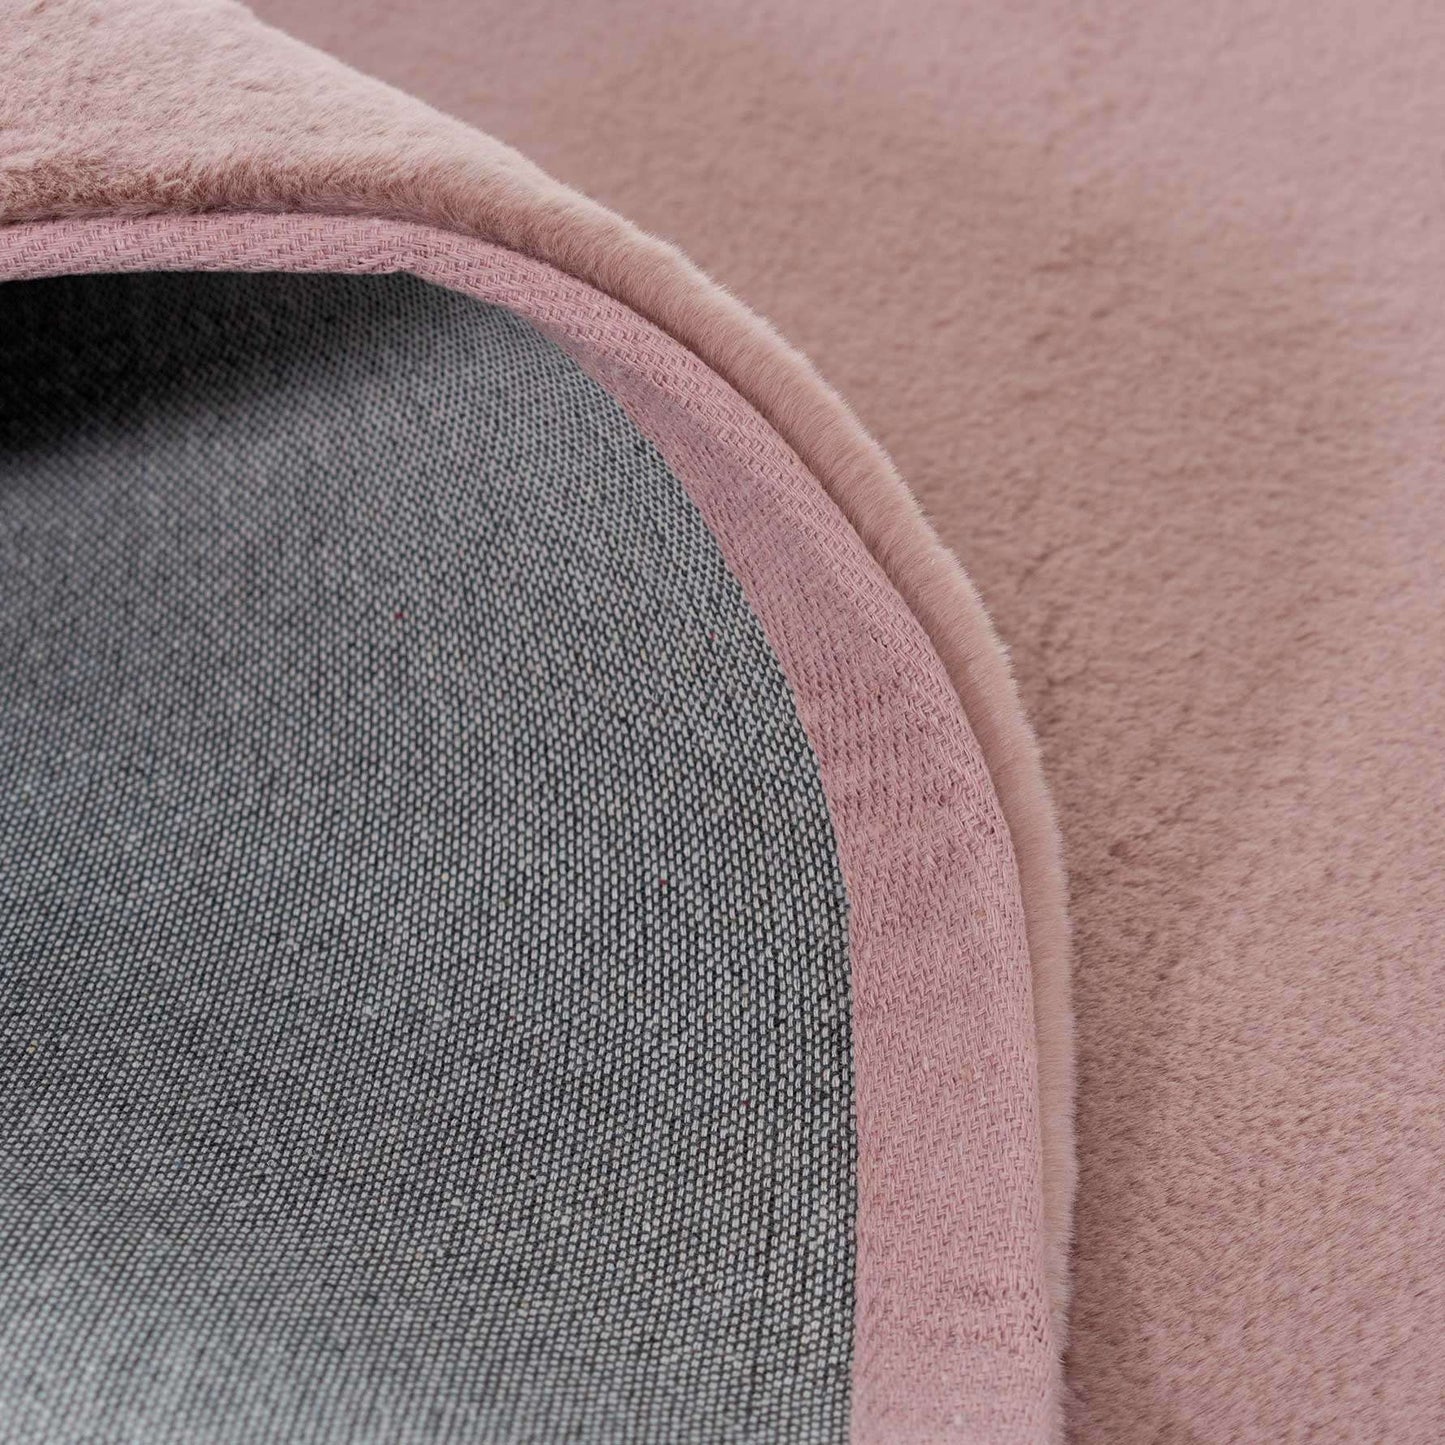 Super Soft Blush Pink Faux Fur Area Rug